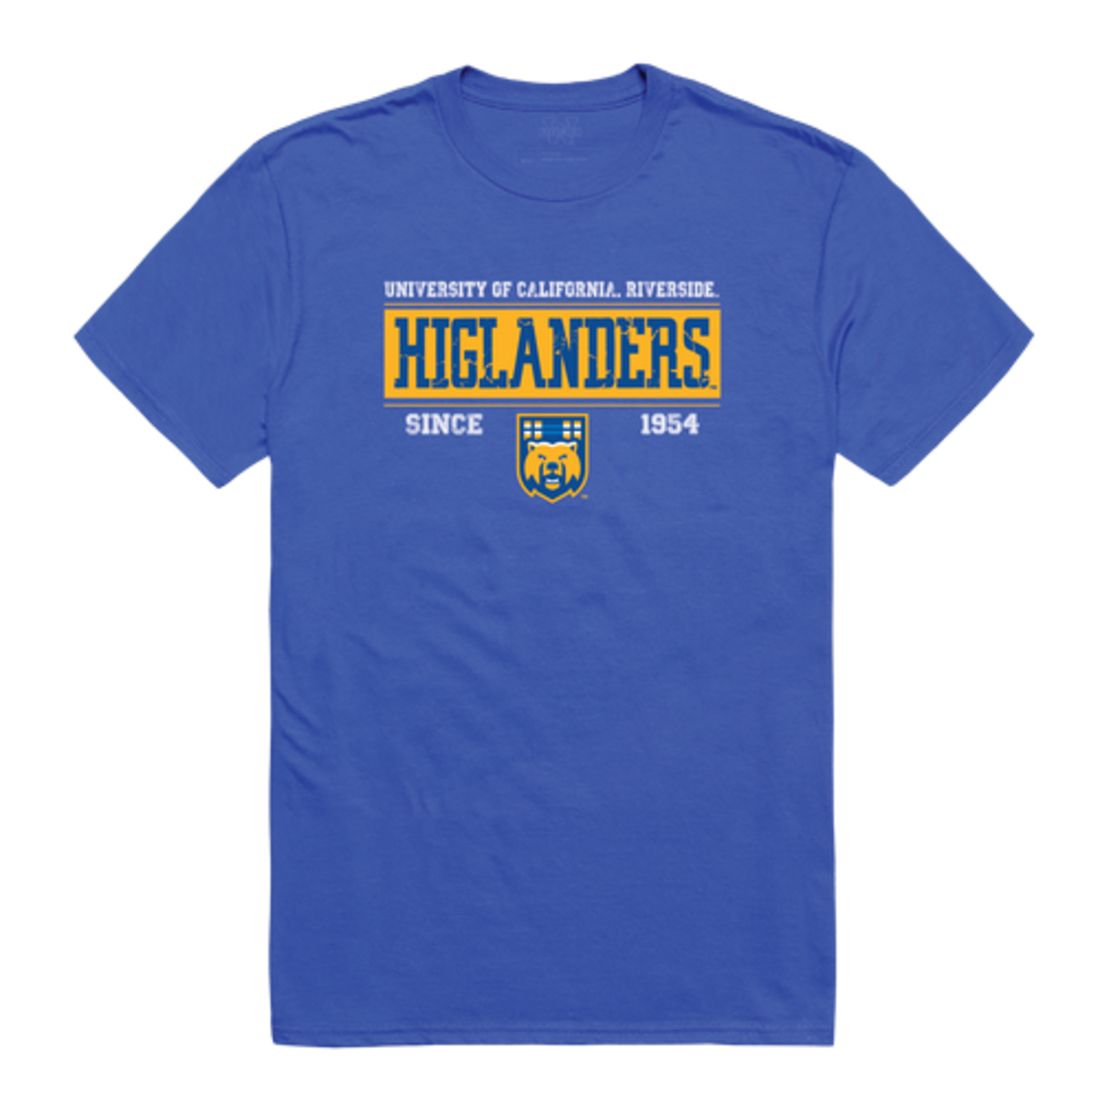 University of California Riverside The Highlanders Established T-Shirt